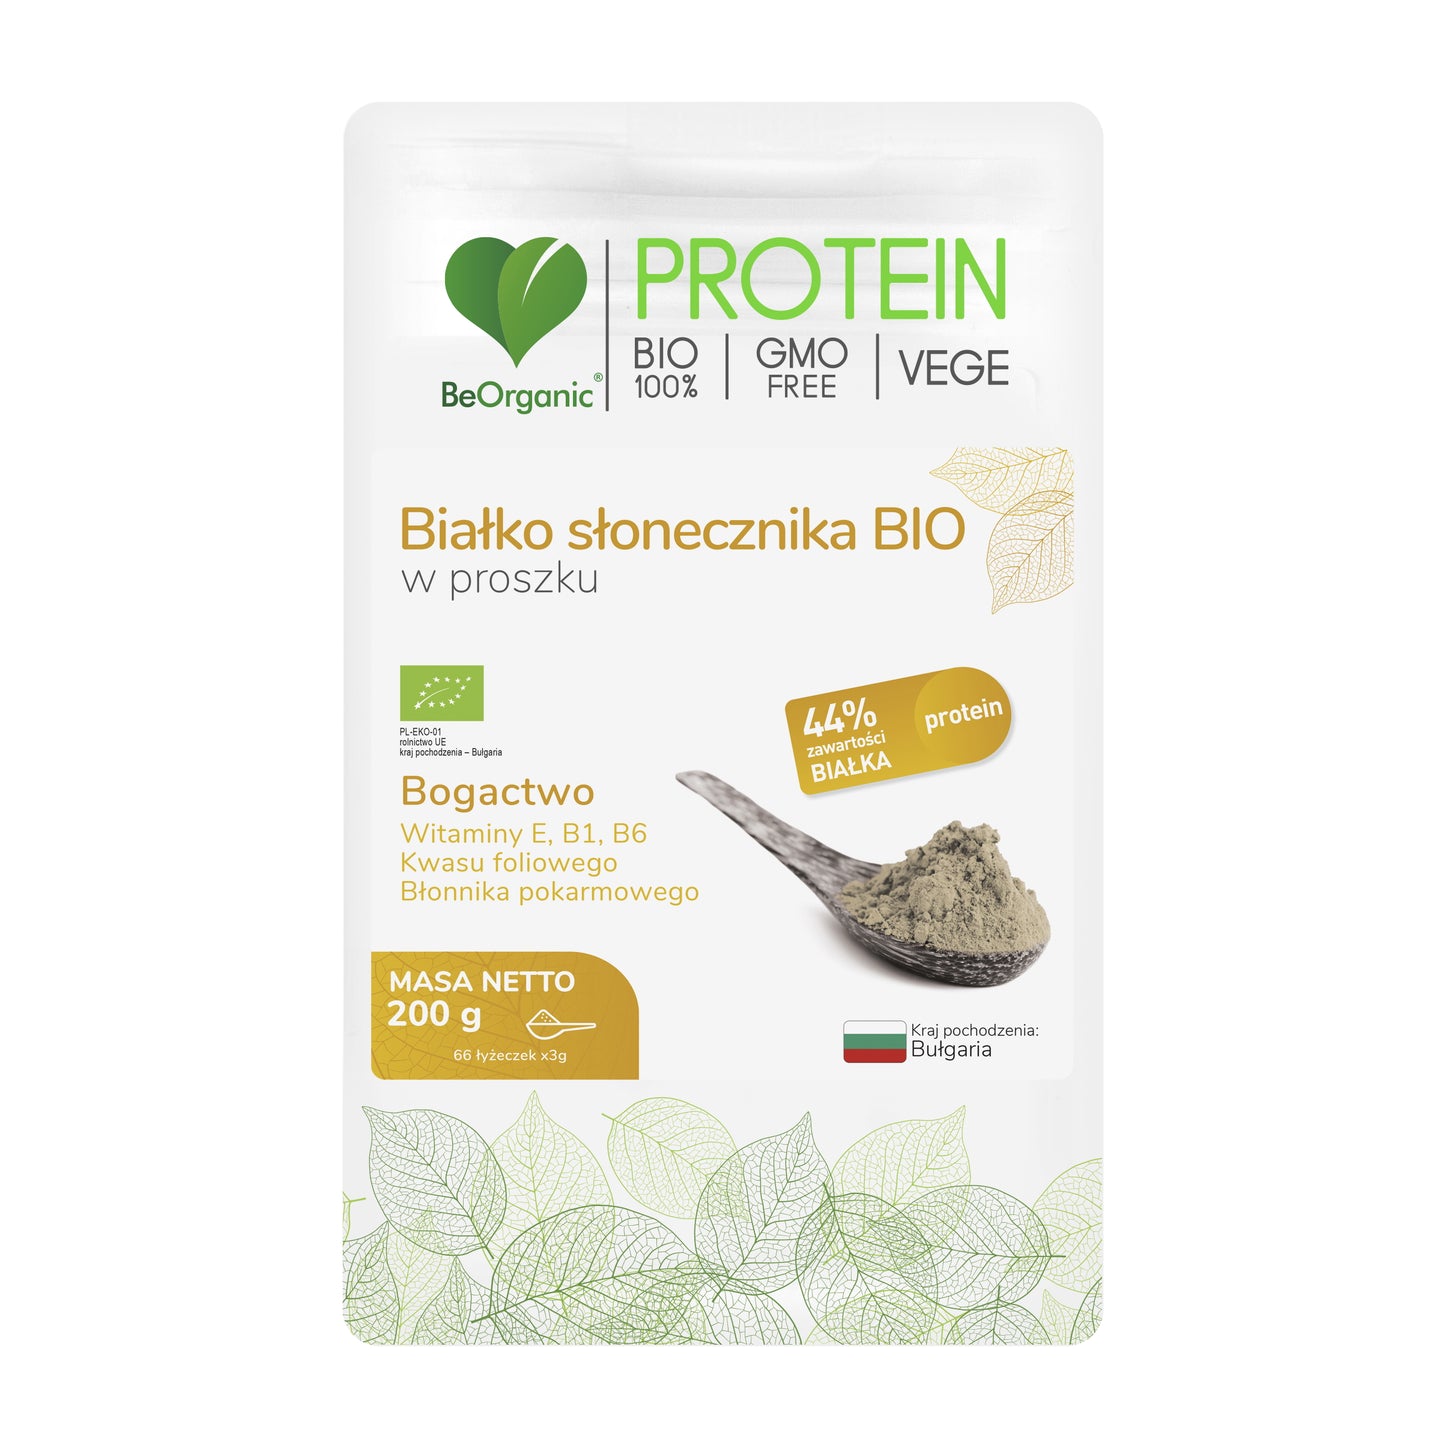 BeOrganic Sunflower Protein Powder, 200g